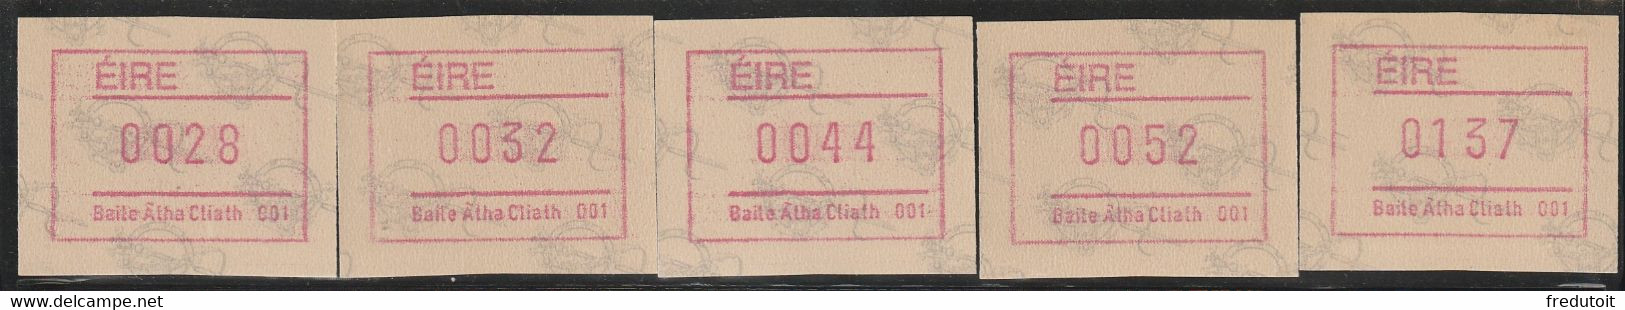 IRLANDE - Timbres Distributeurs / FRAMA  ATM - N°4** (1992) Baile Atha Cliath 001 - Frankeervignetten (Frama)